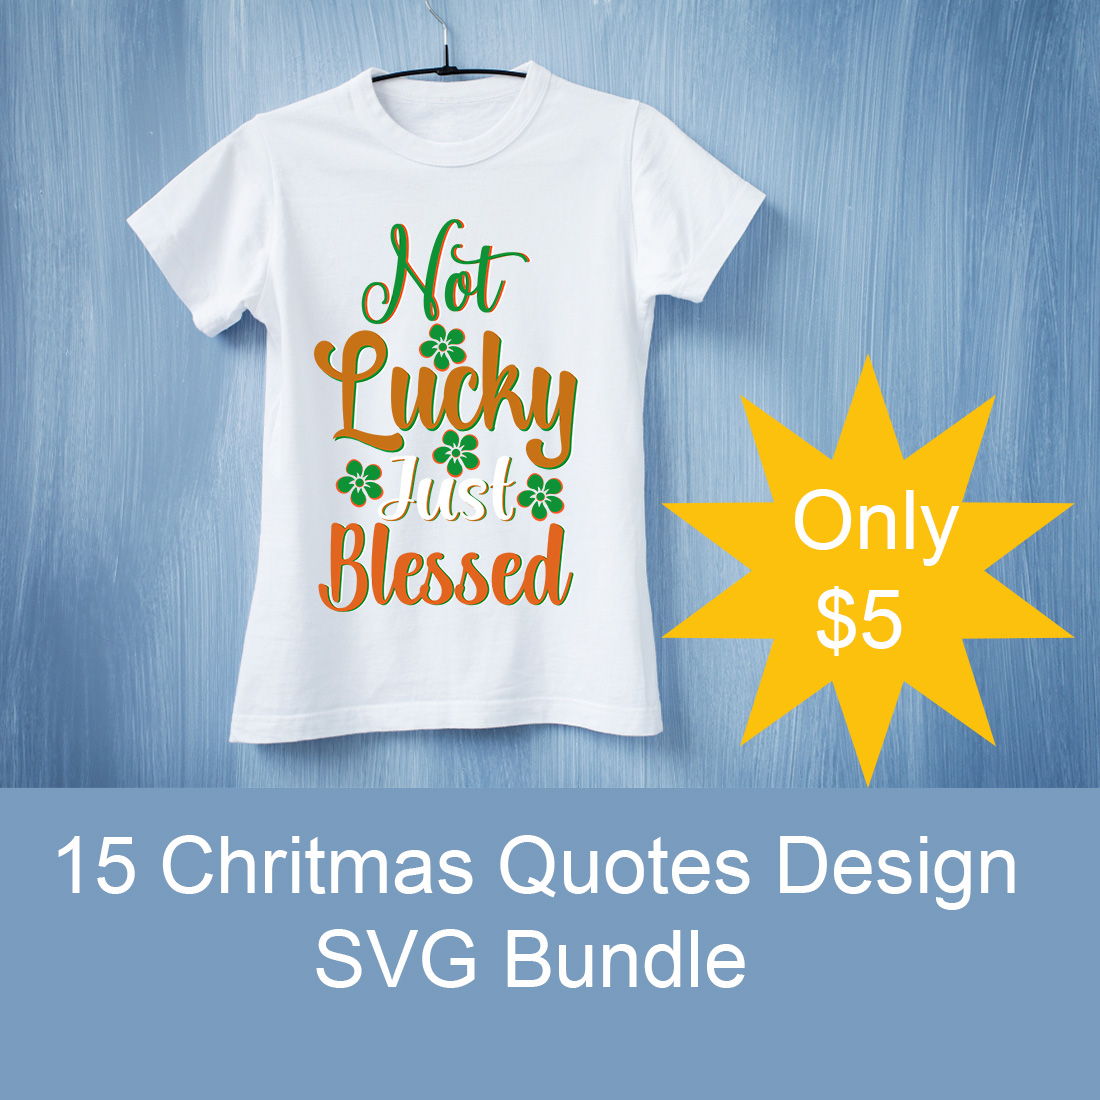 T-shirt Chritmas Quotes Design SVG Bundle cover image.